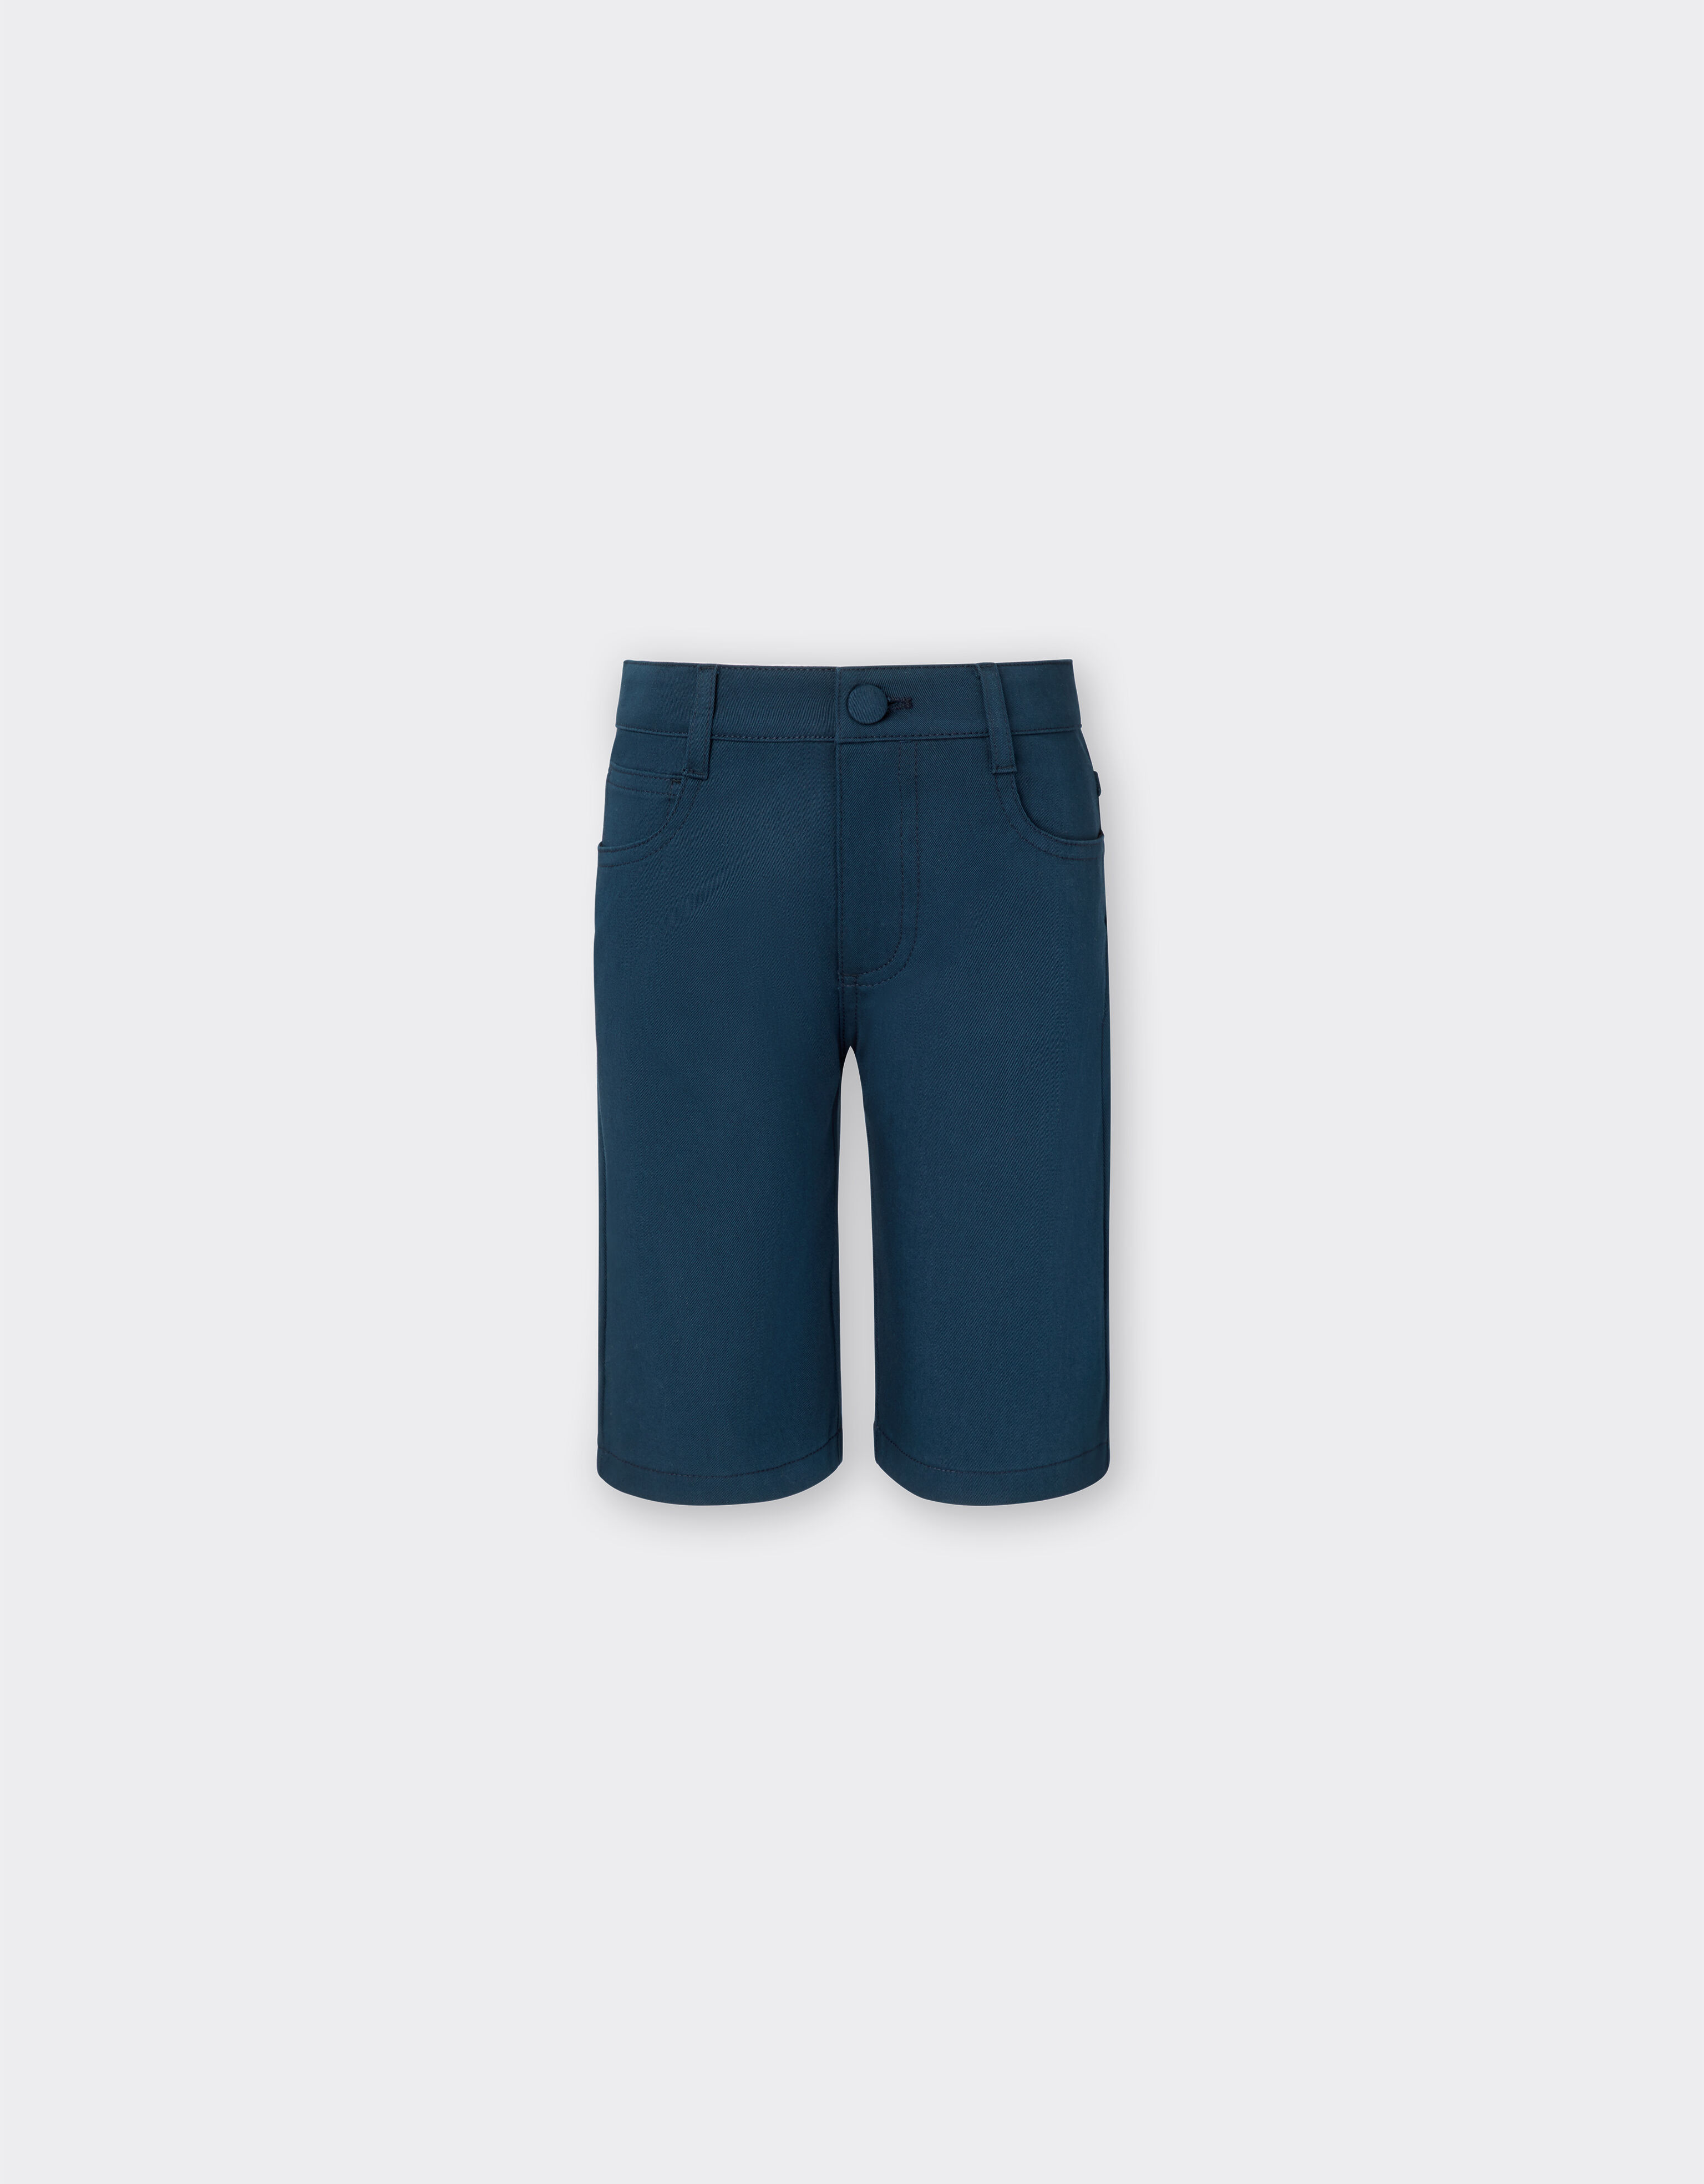 Ferrari Children’s Bermuda shorts in organic cotton Rosso Corsa 46998fK